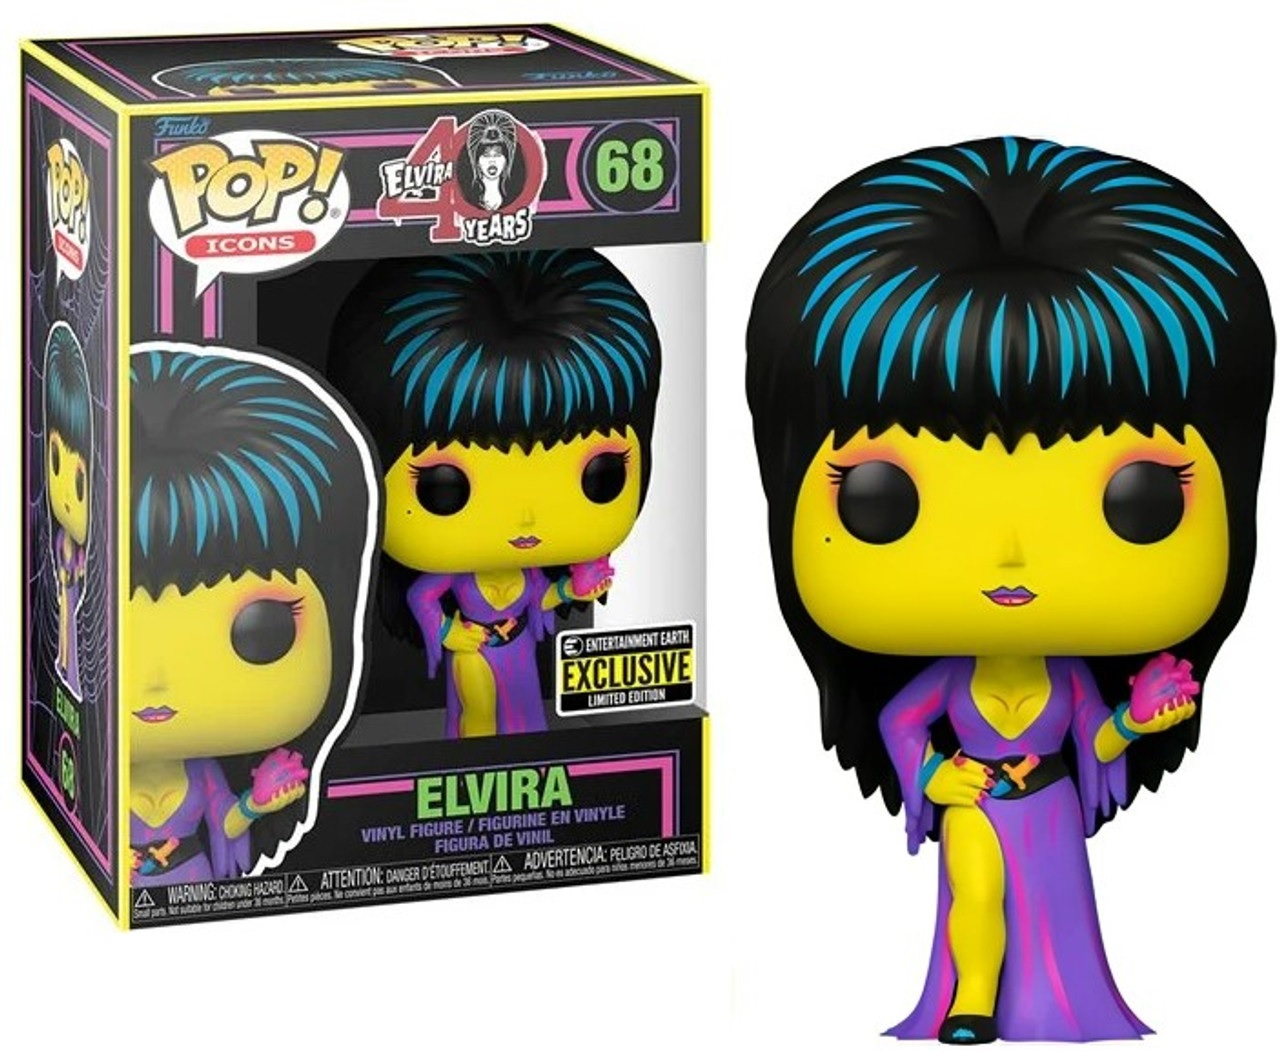 Funko Pop Icons Elvira 40 Years Black Light Exclusive # 68